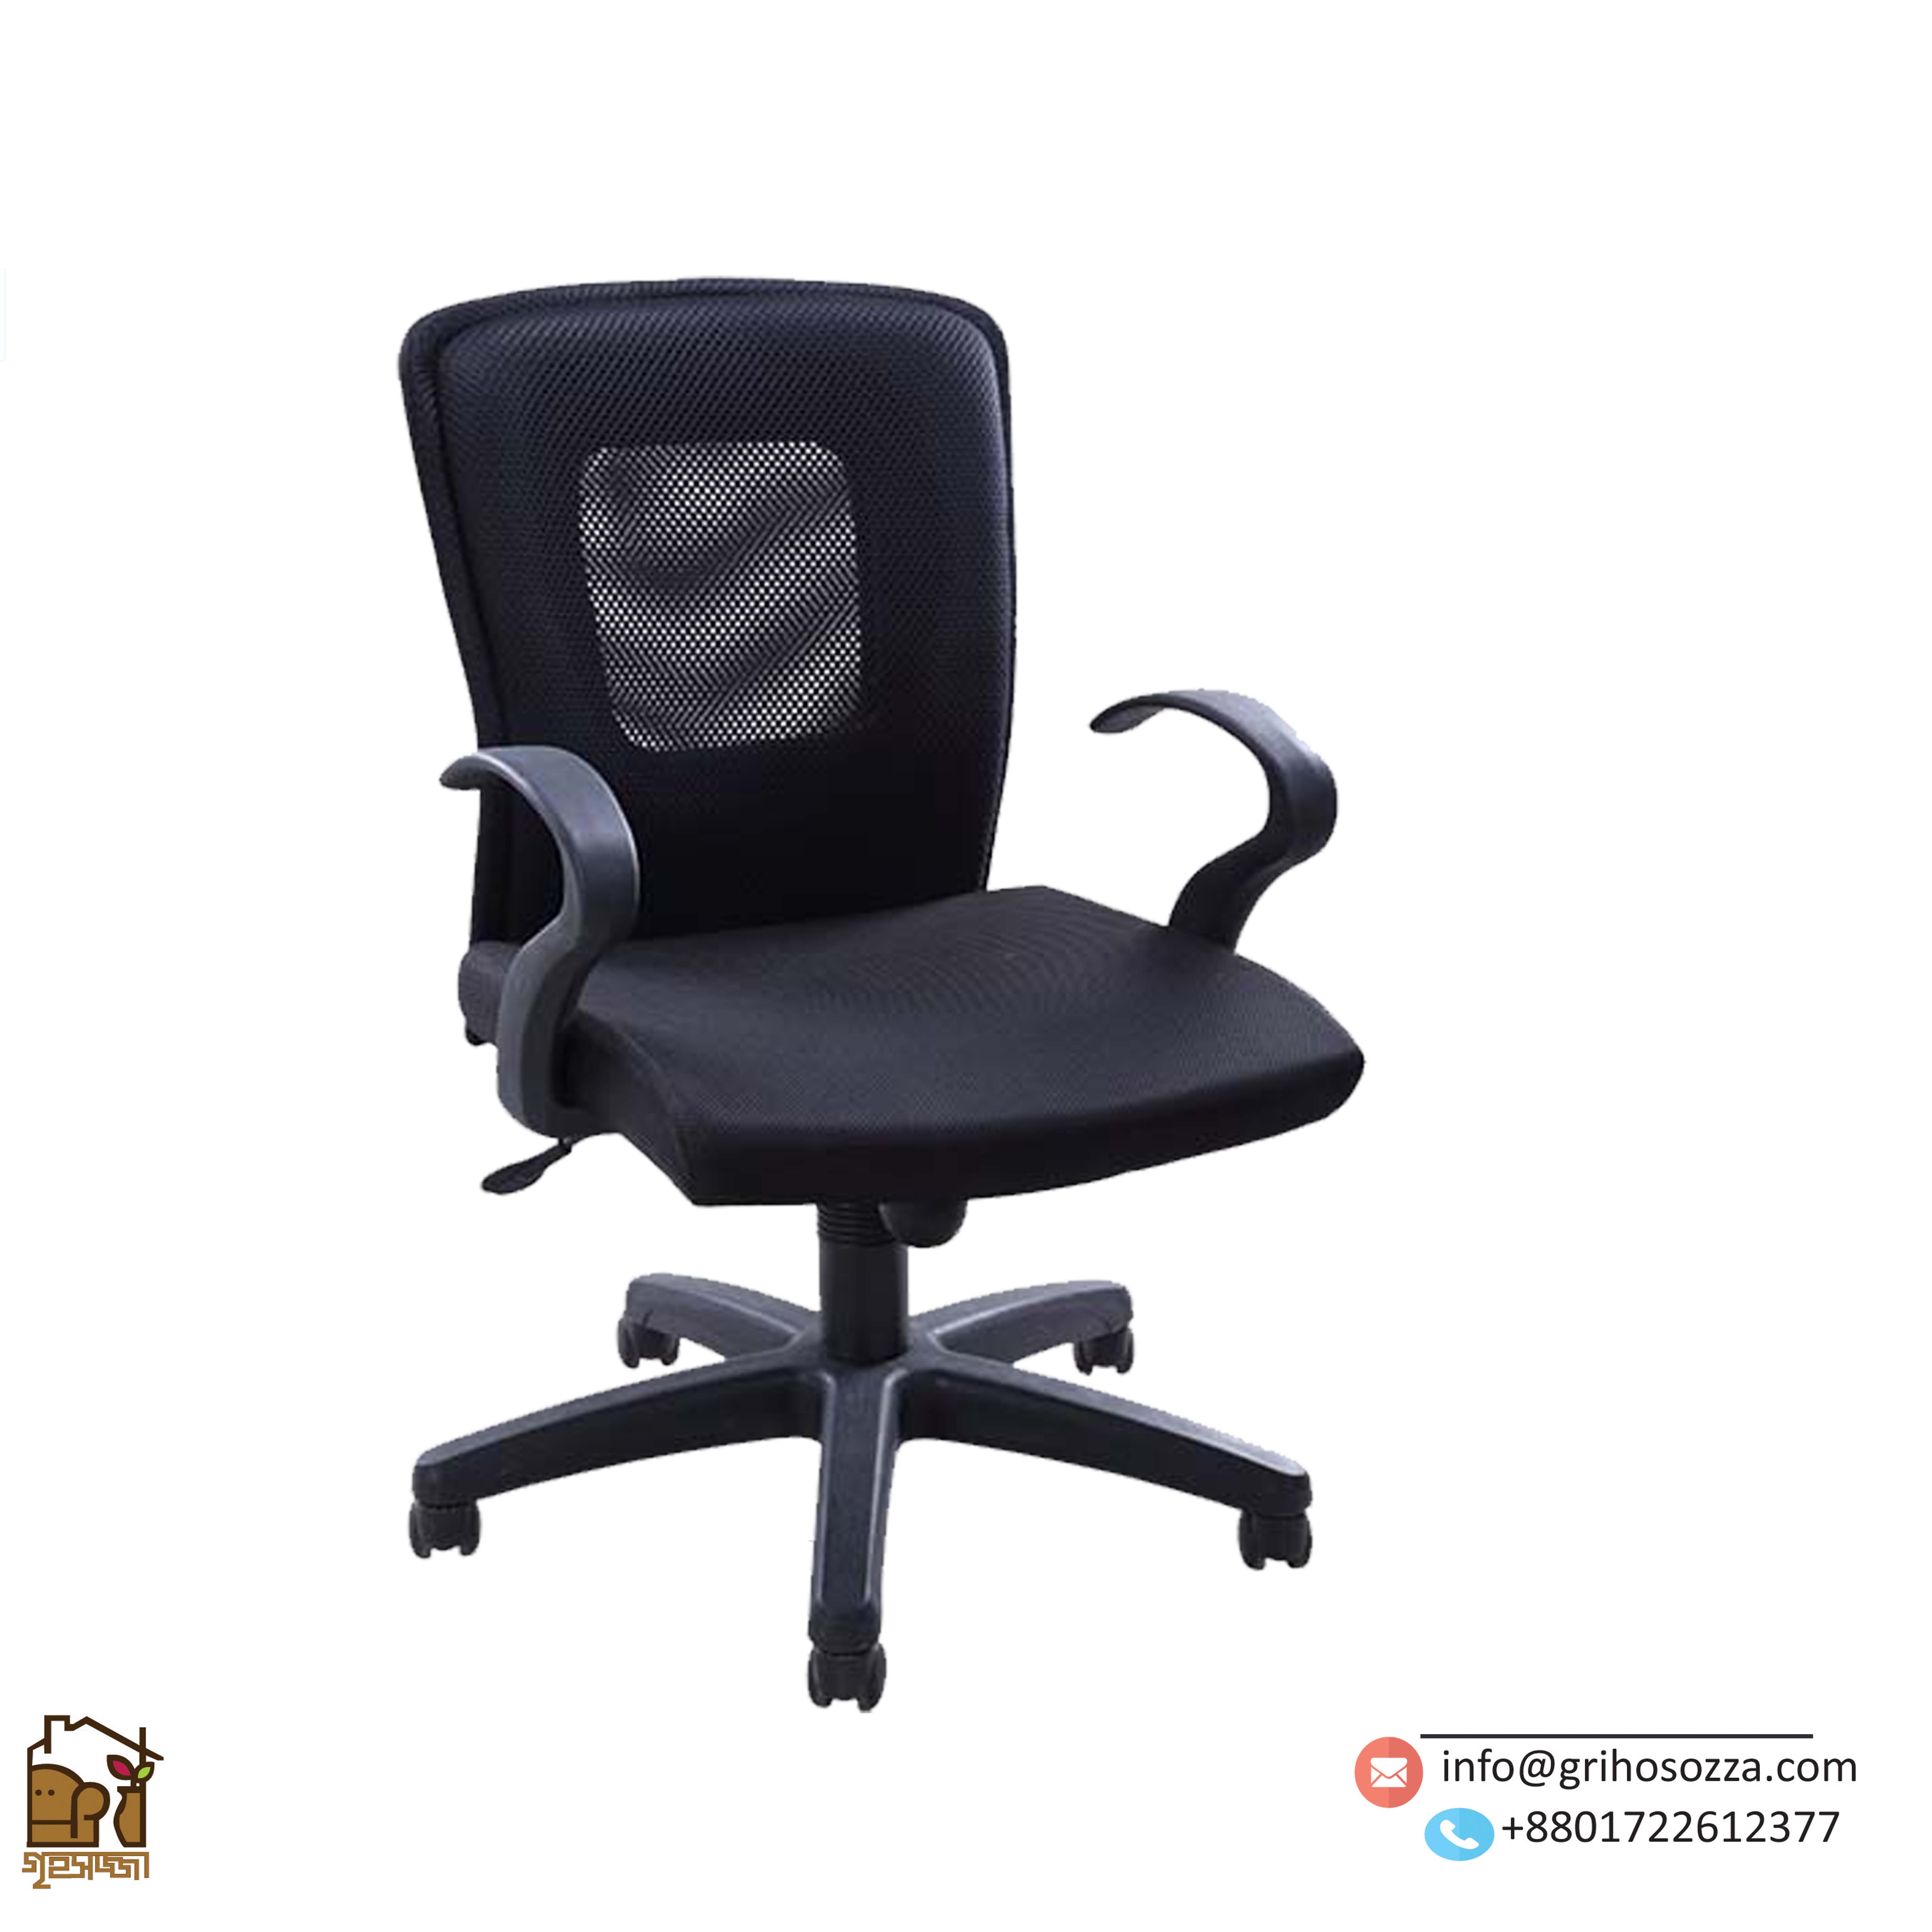  Swivel chair Office-CSC-210-7-1-66 